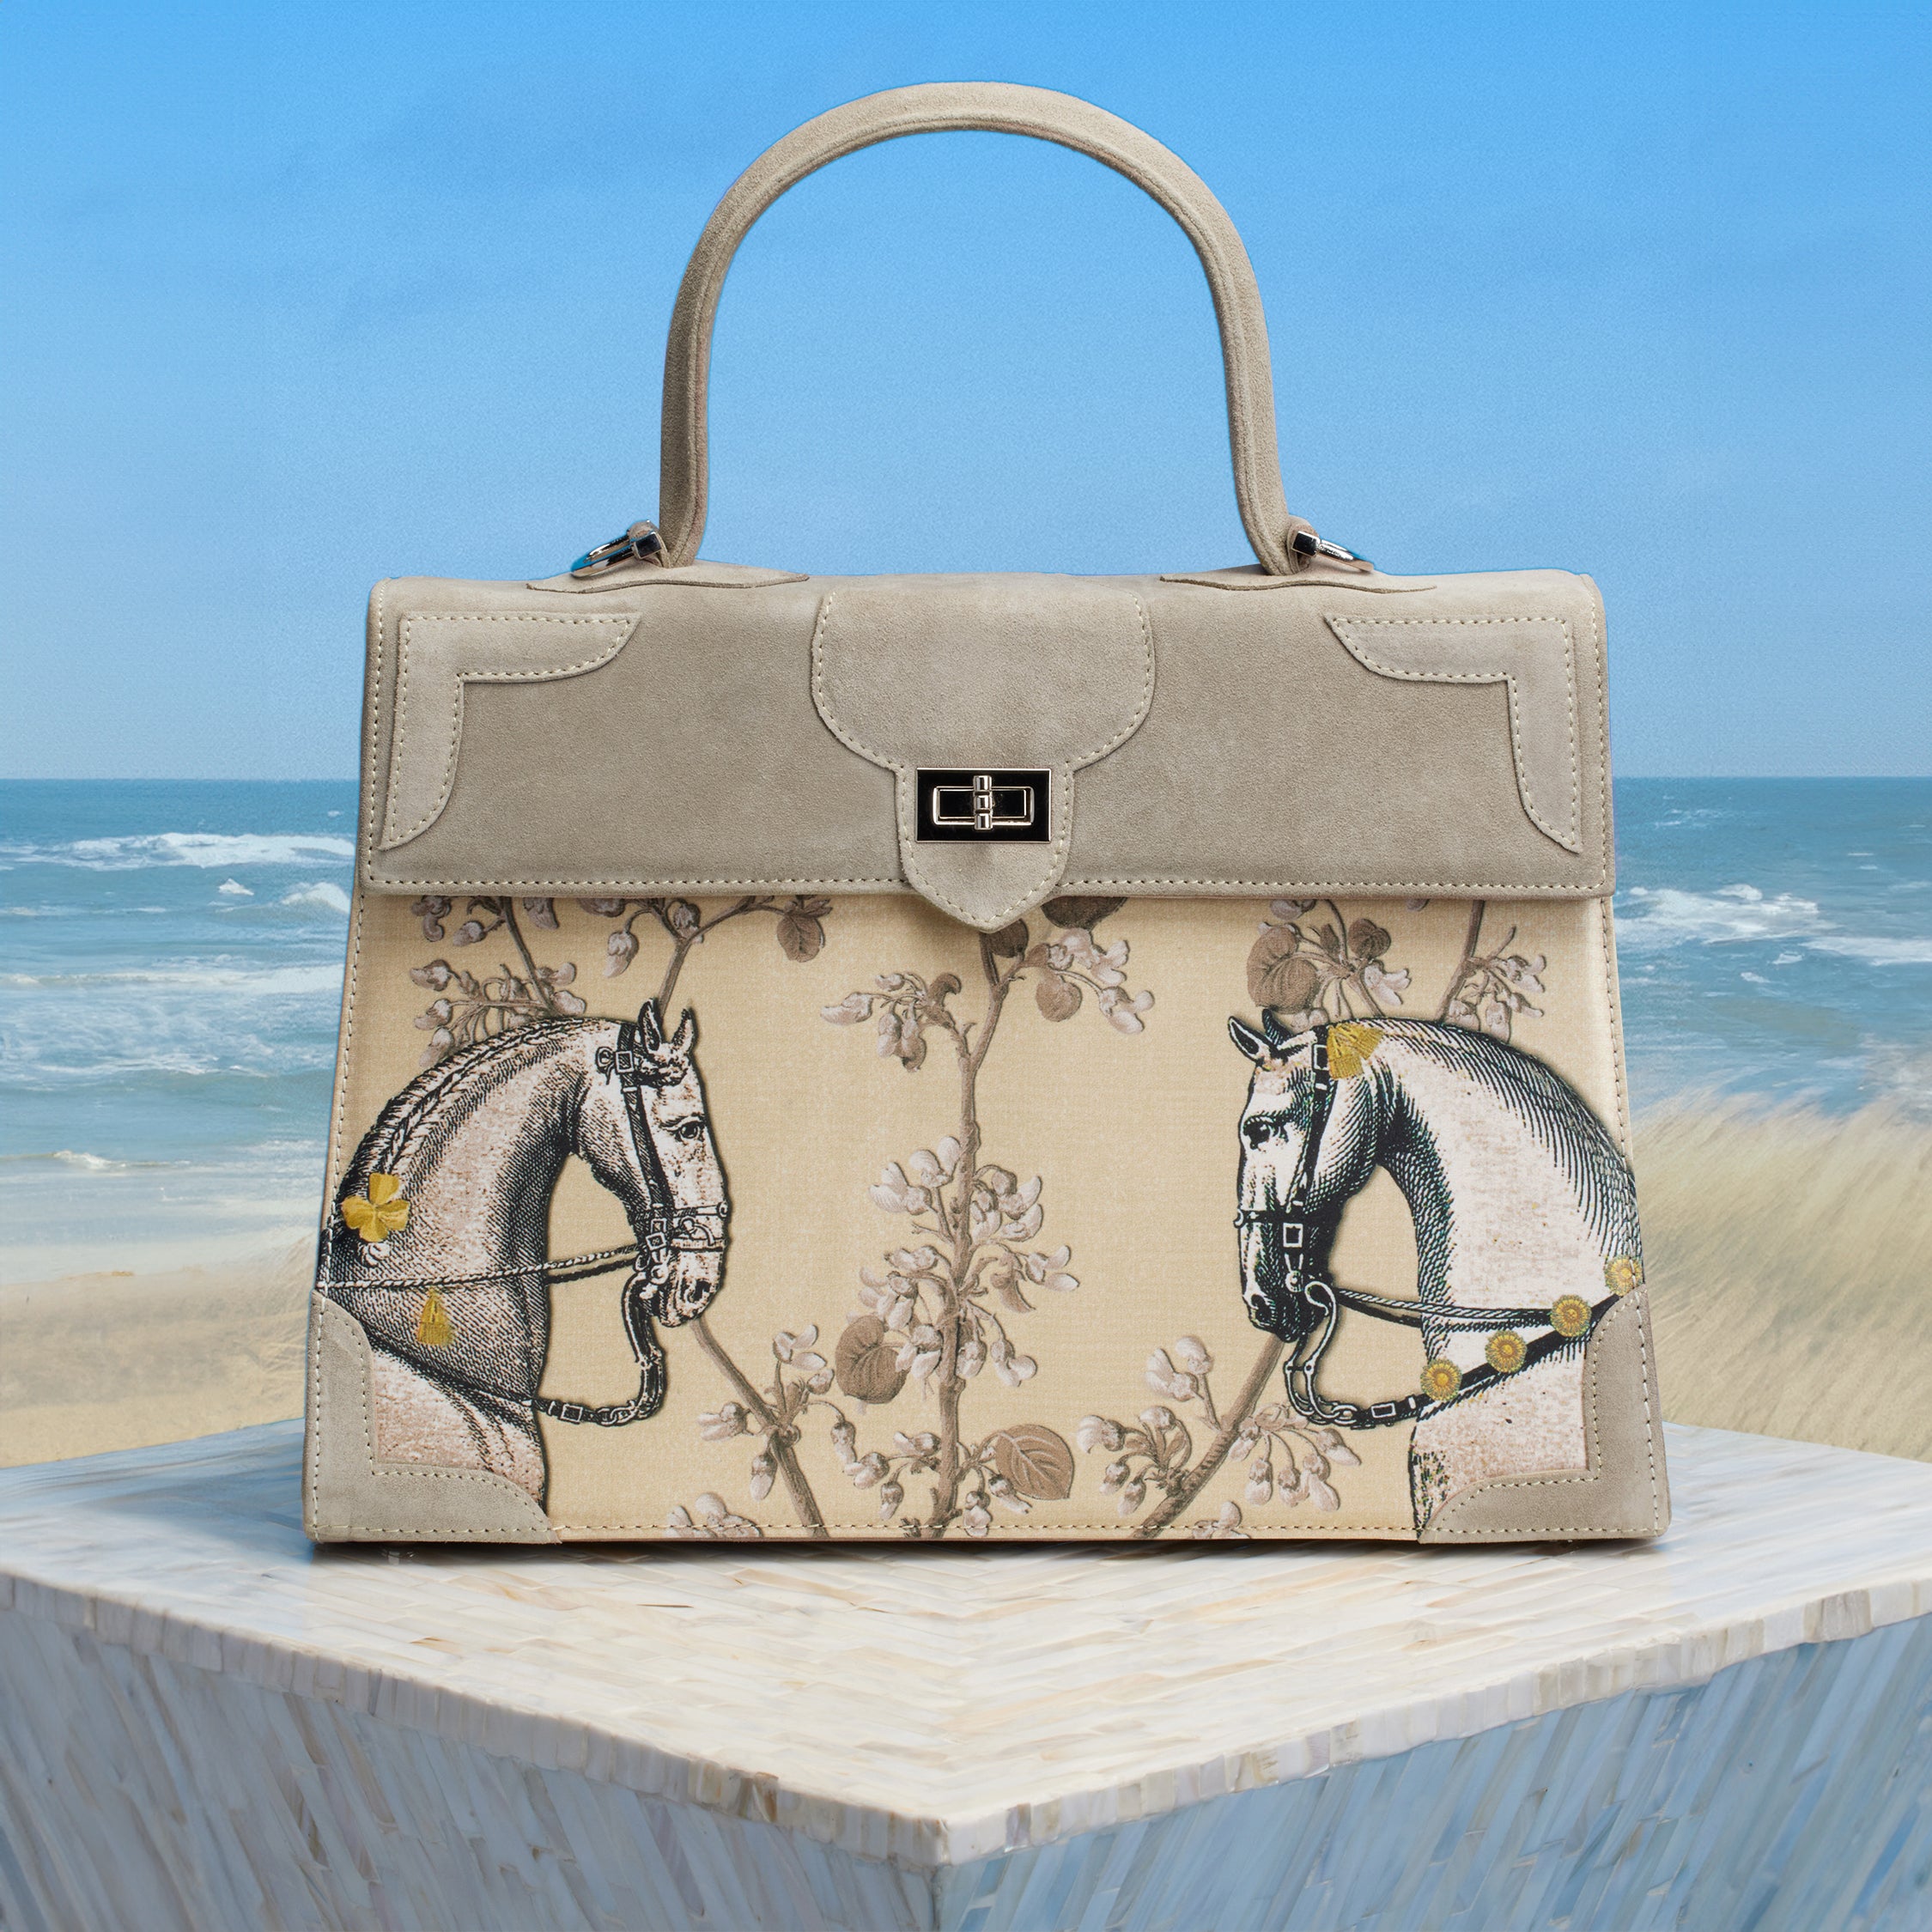 Marquise Paris Handbag. Click to shop.